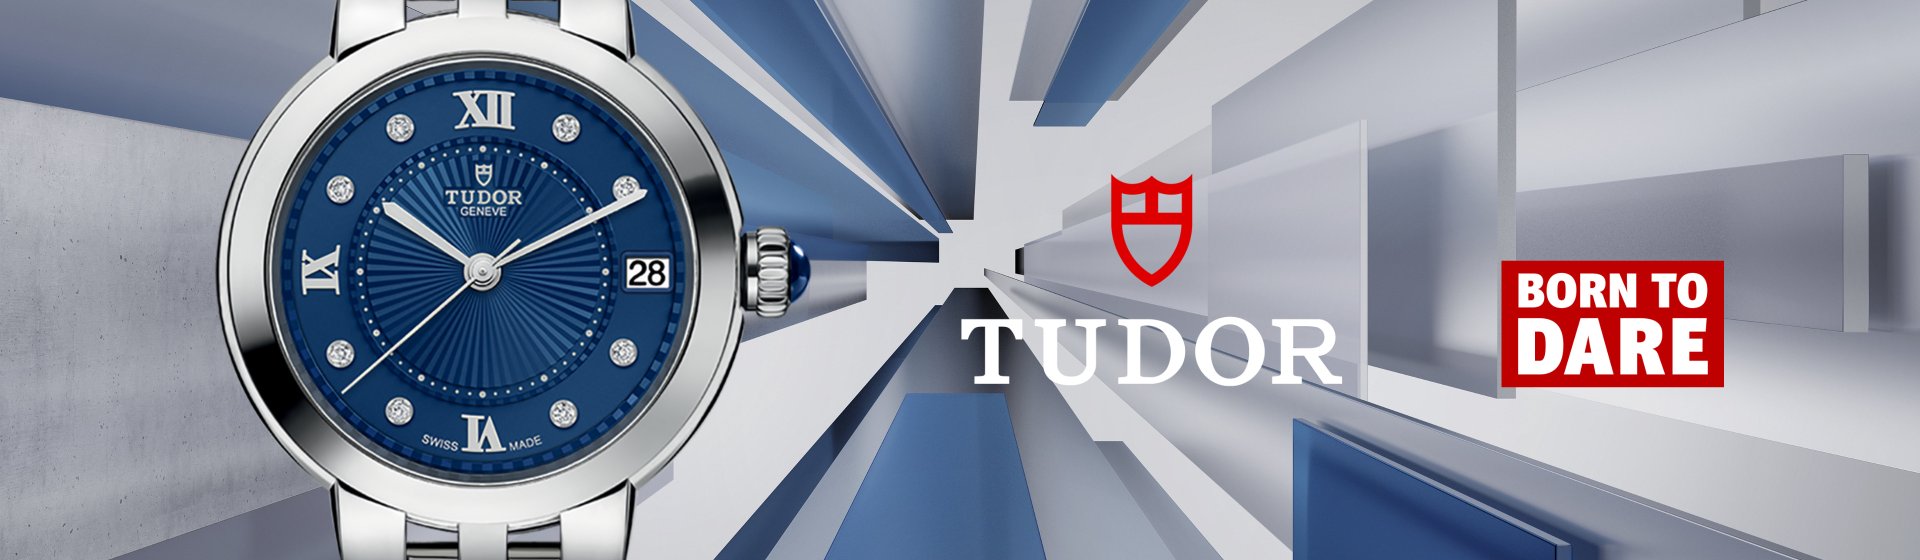 Tudor-banner Desktop 2